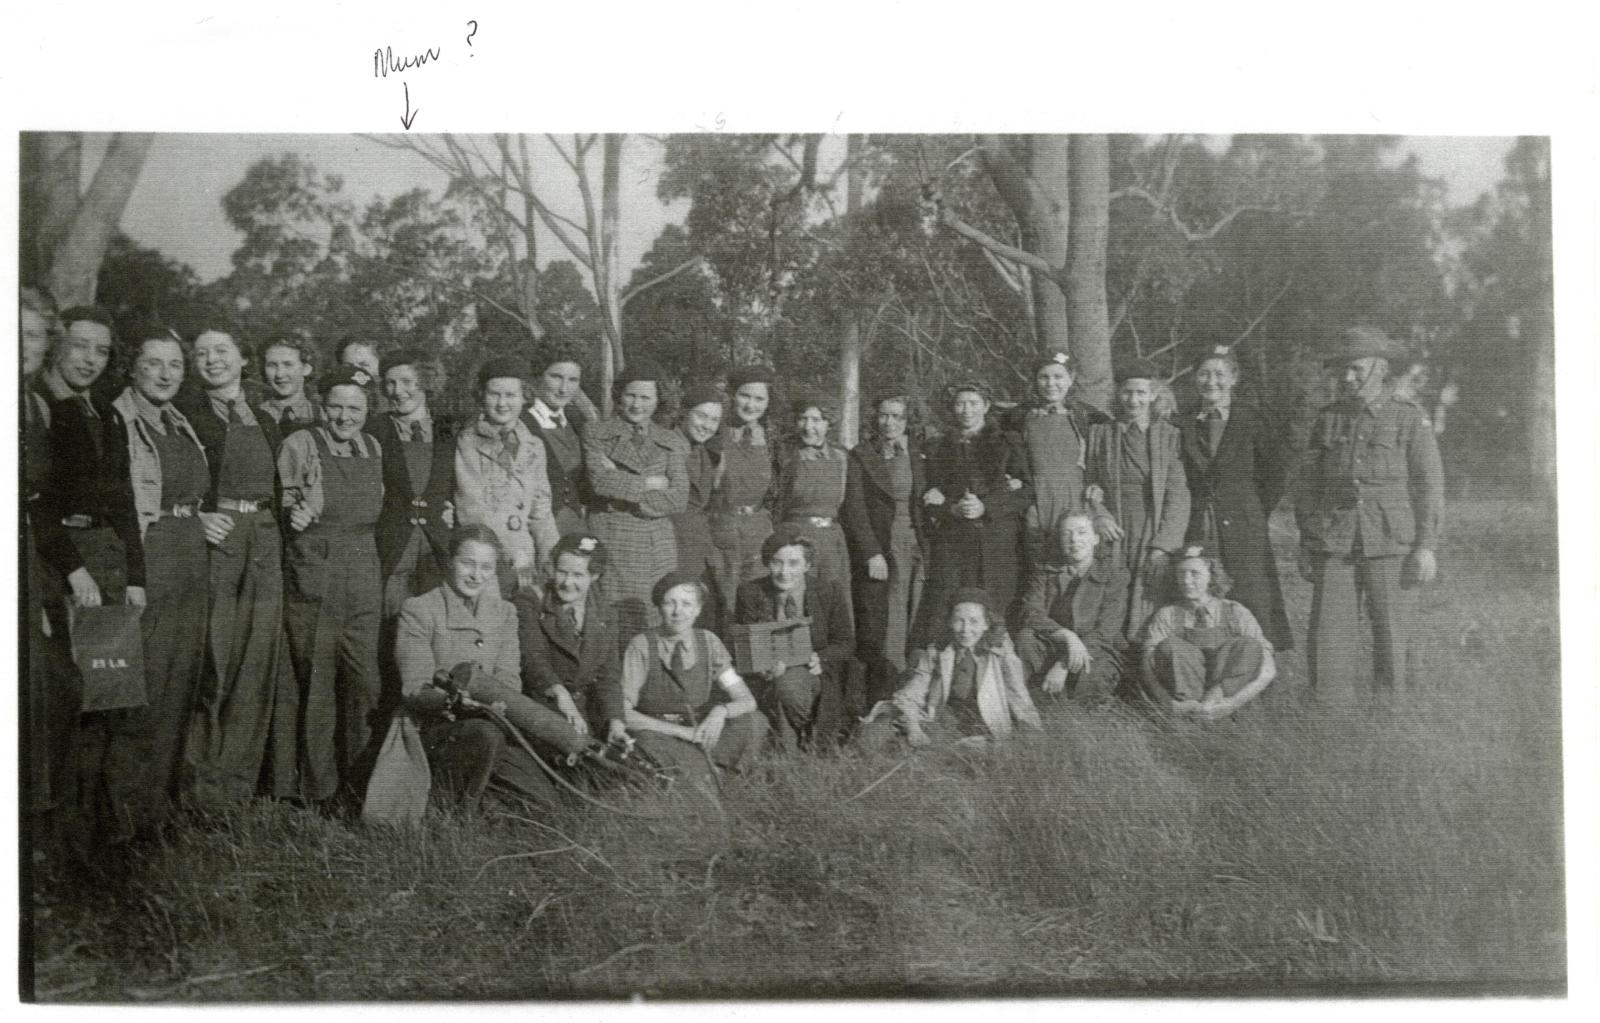 Group photograph of AWEC members.